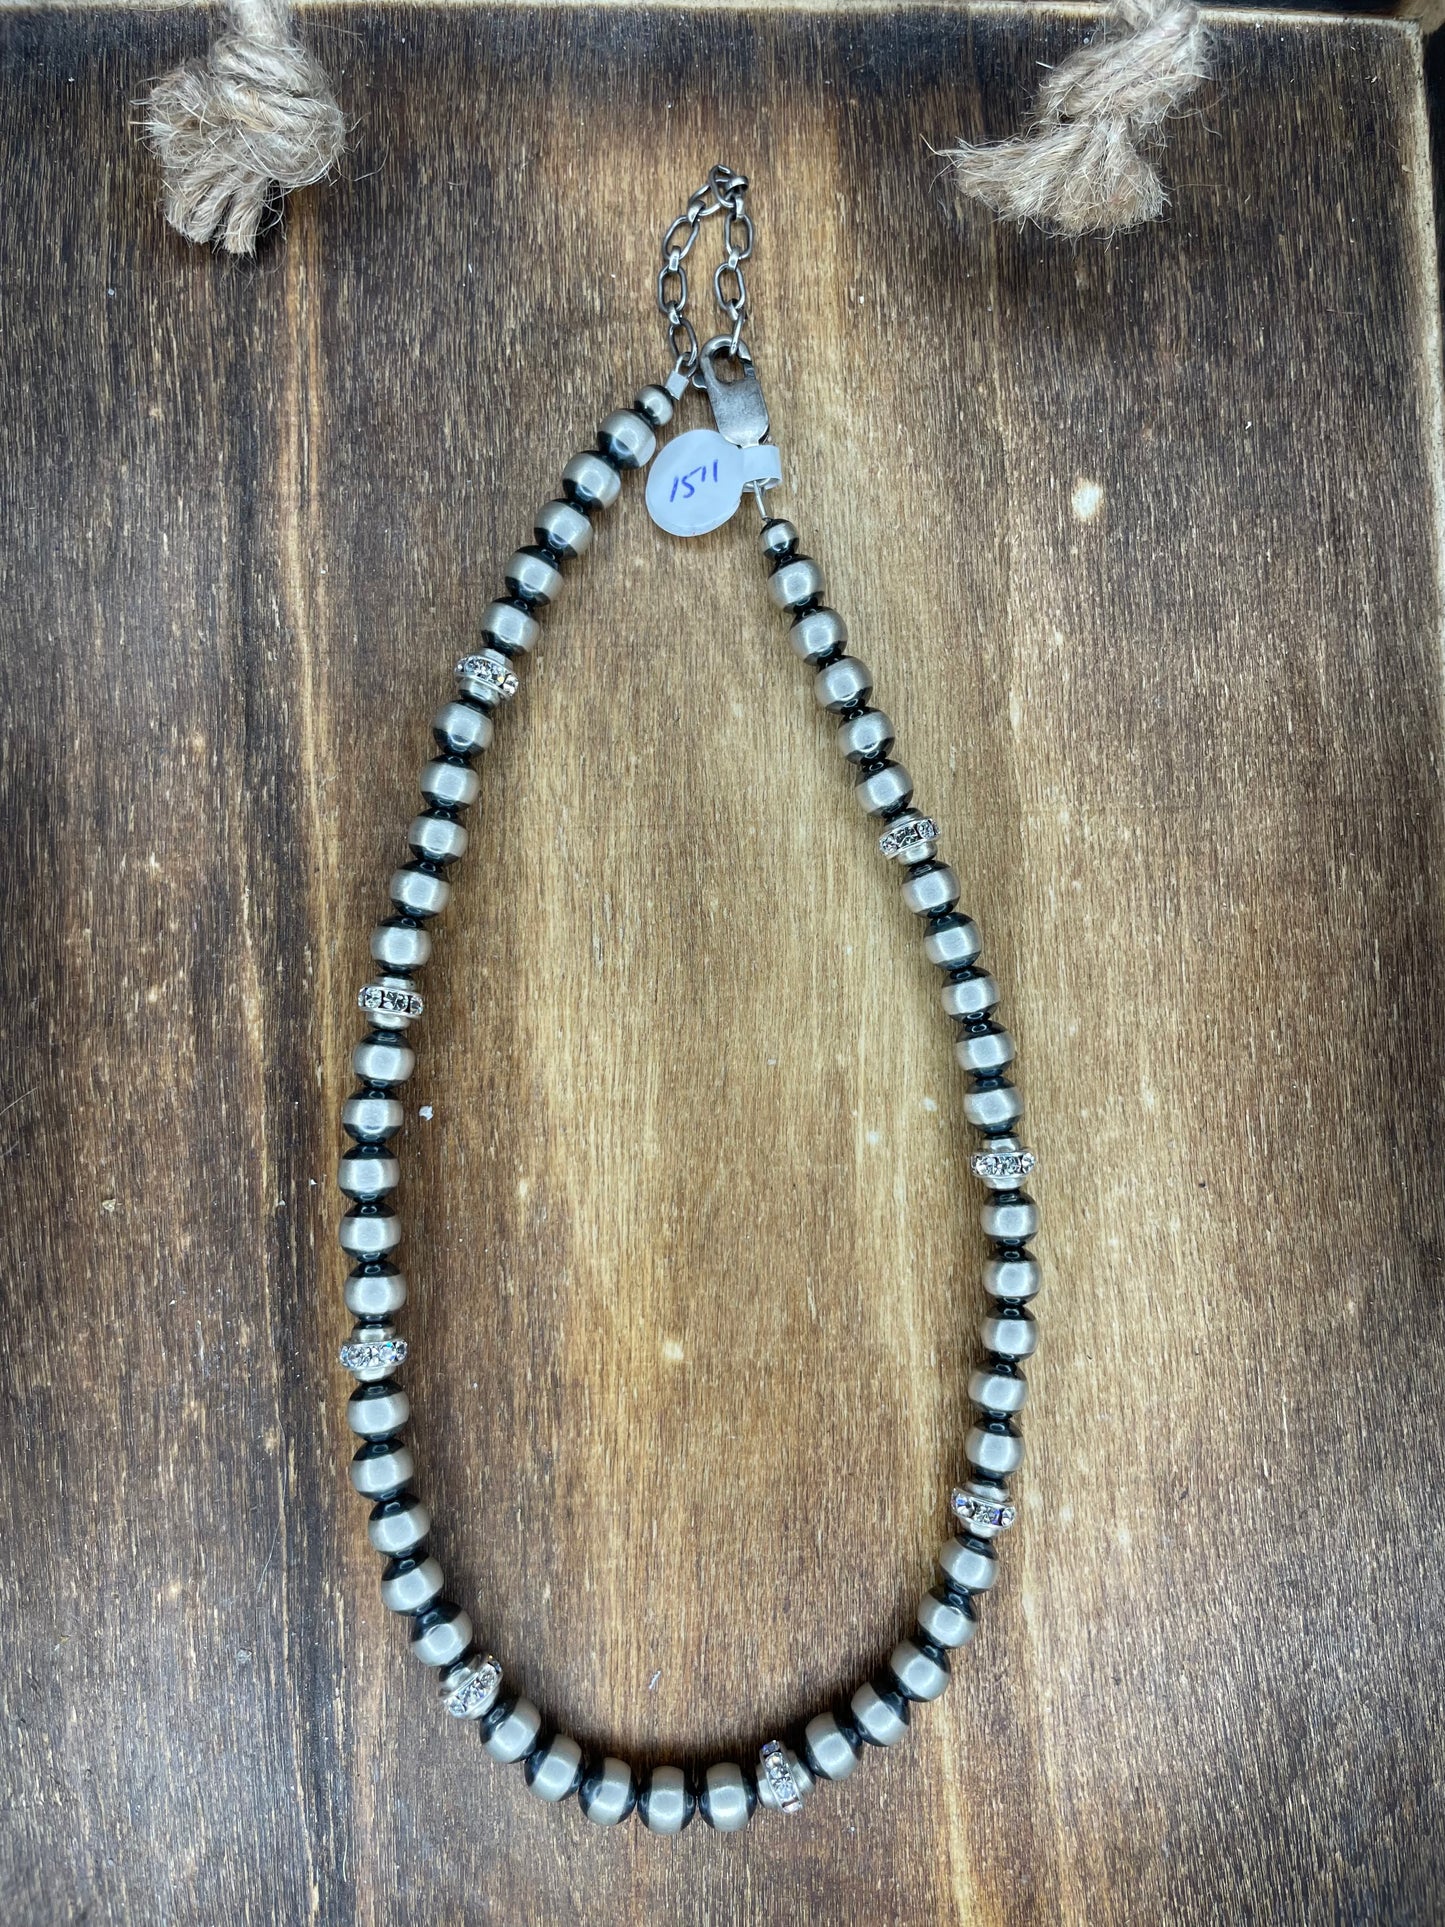 6mm 15” Navajo Pearls with Diamonds (Swarovski)